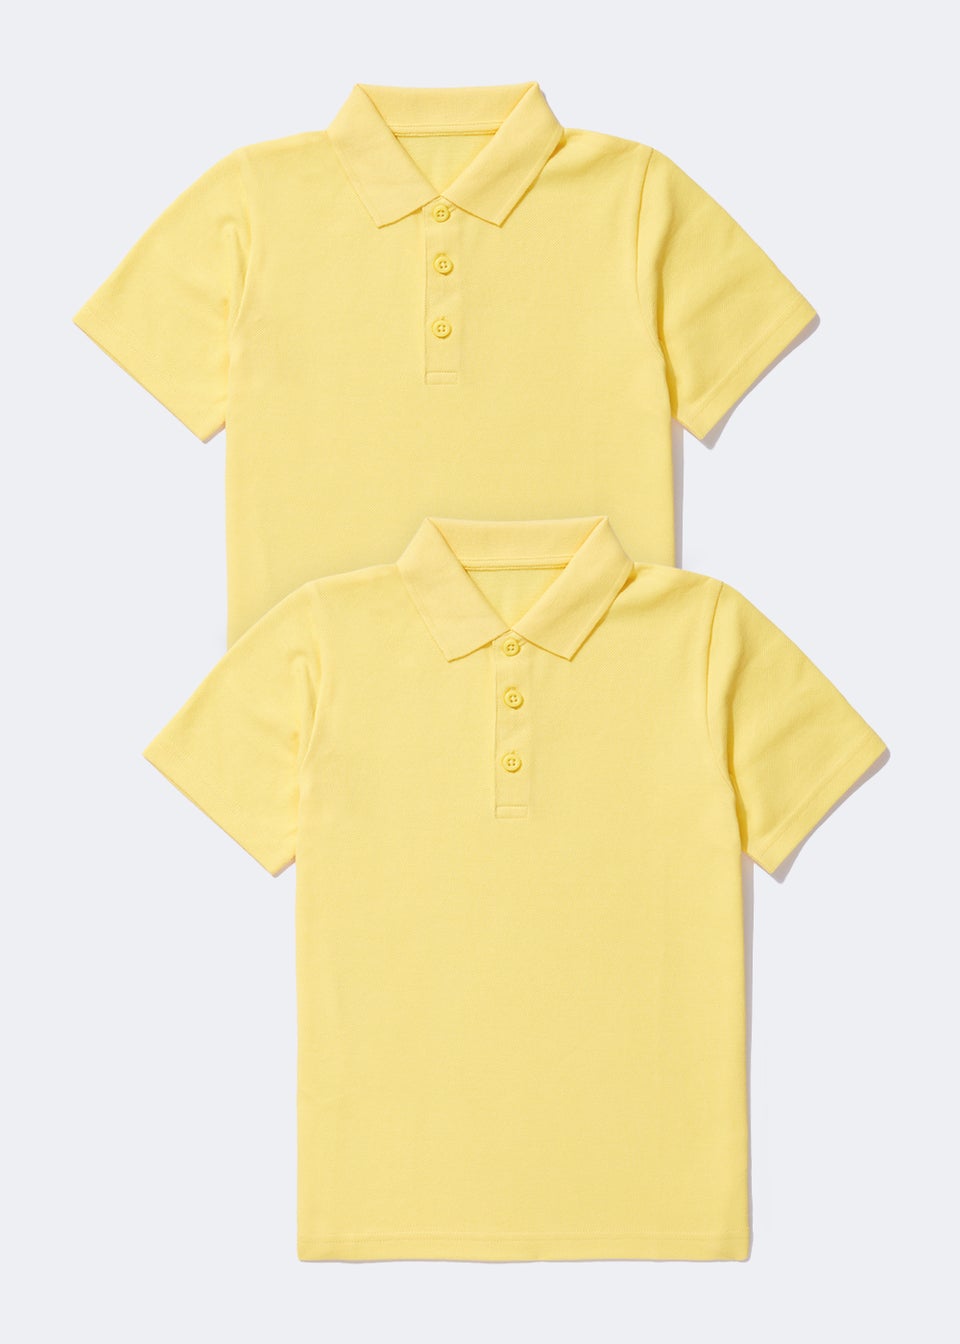 Kids 2 Pack Yellow School Polo Shirts (3-13yrs)